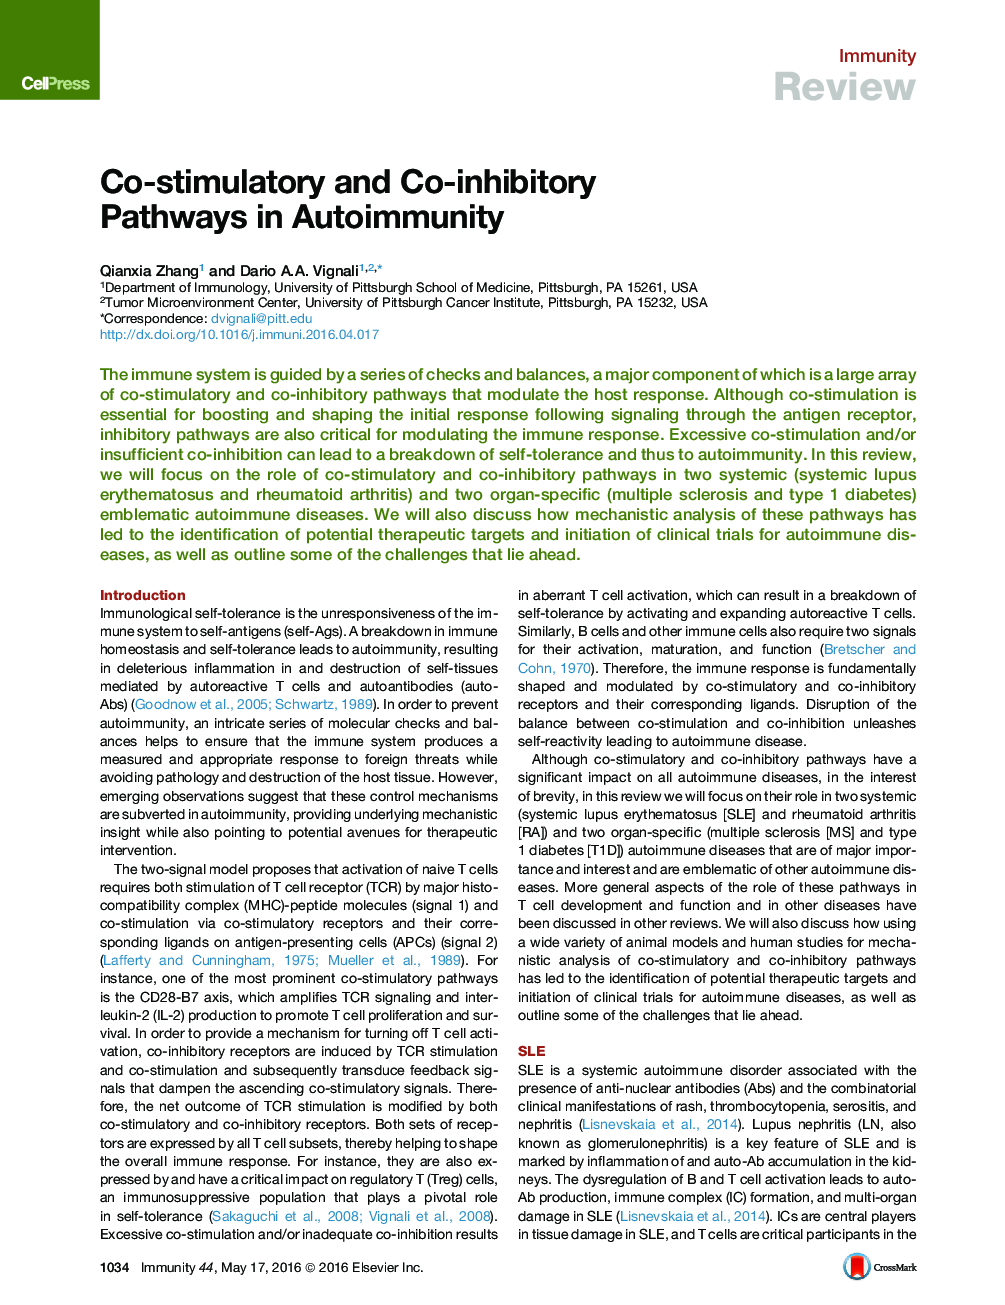 Co-stimulatory and Co-inhibitory Pathways in Autoimmunity